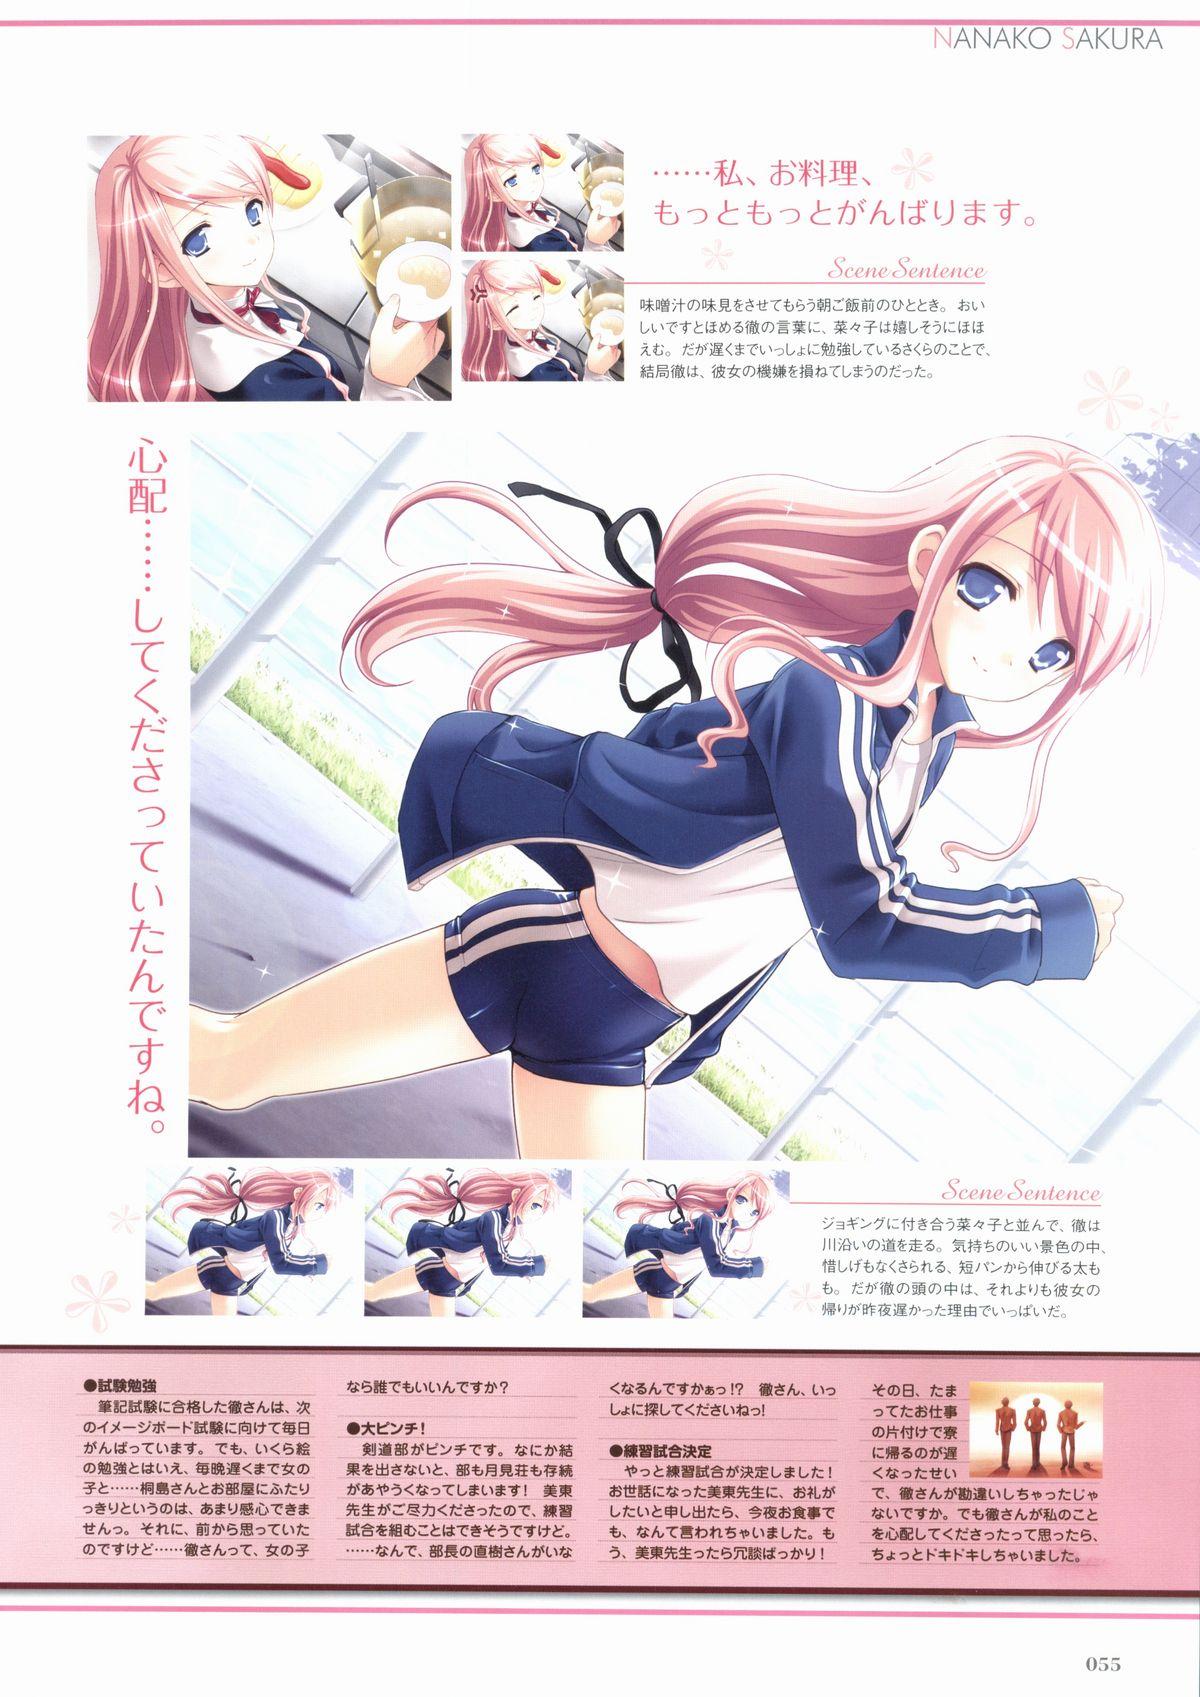 Sakura Sakura Visual Fan Book 59